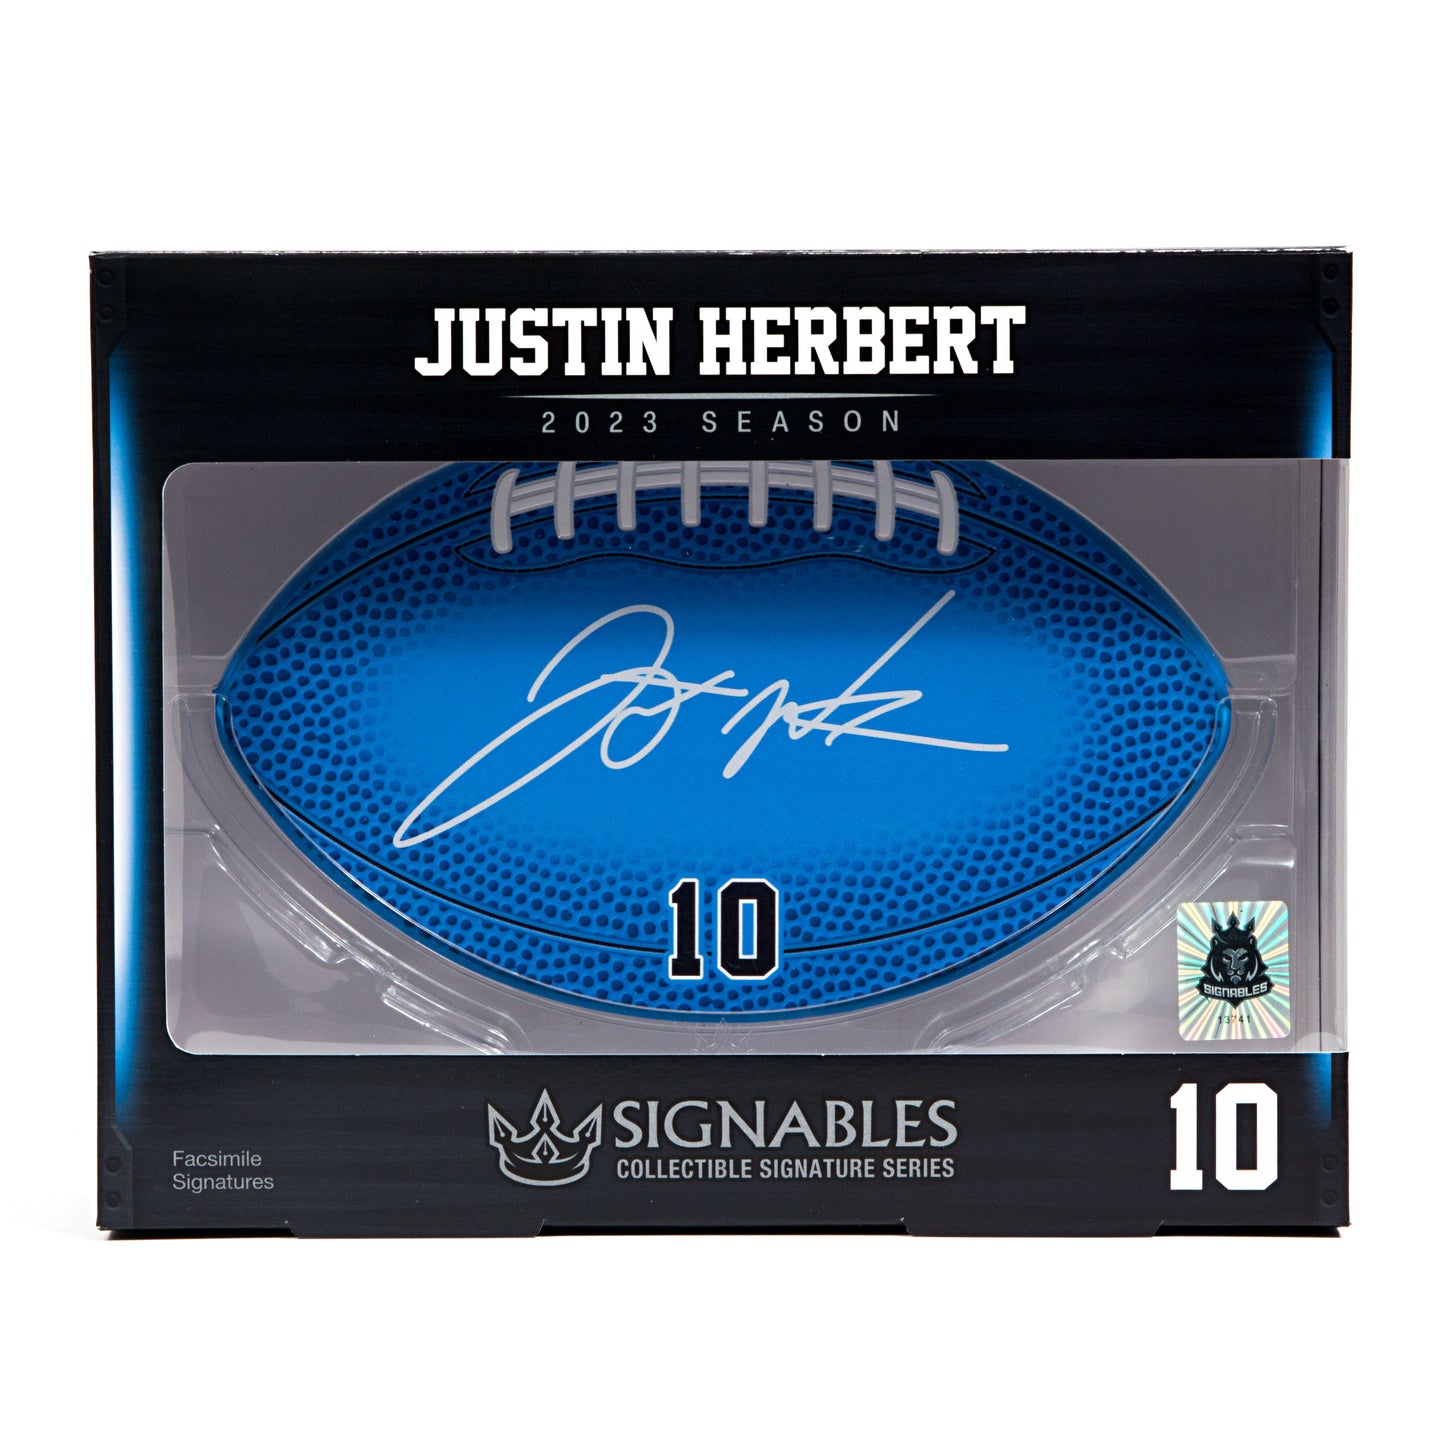 Justin Herbert  - NFLPA 2023 Signables Collectible